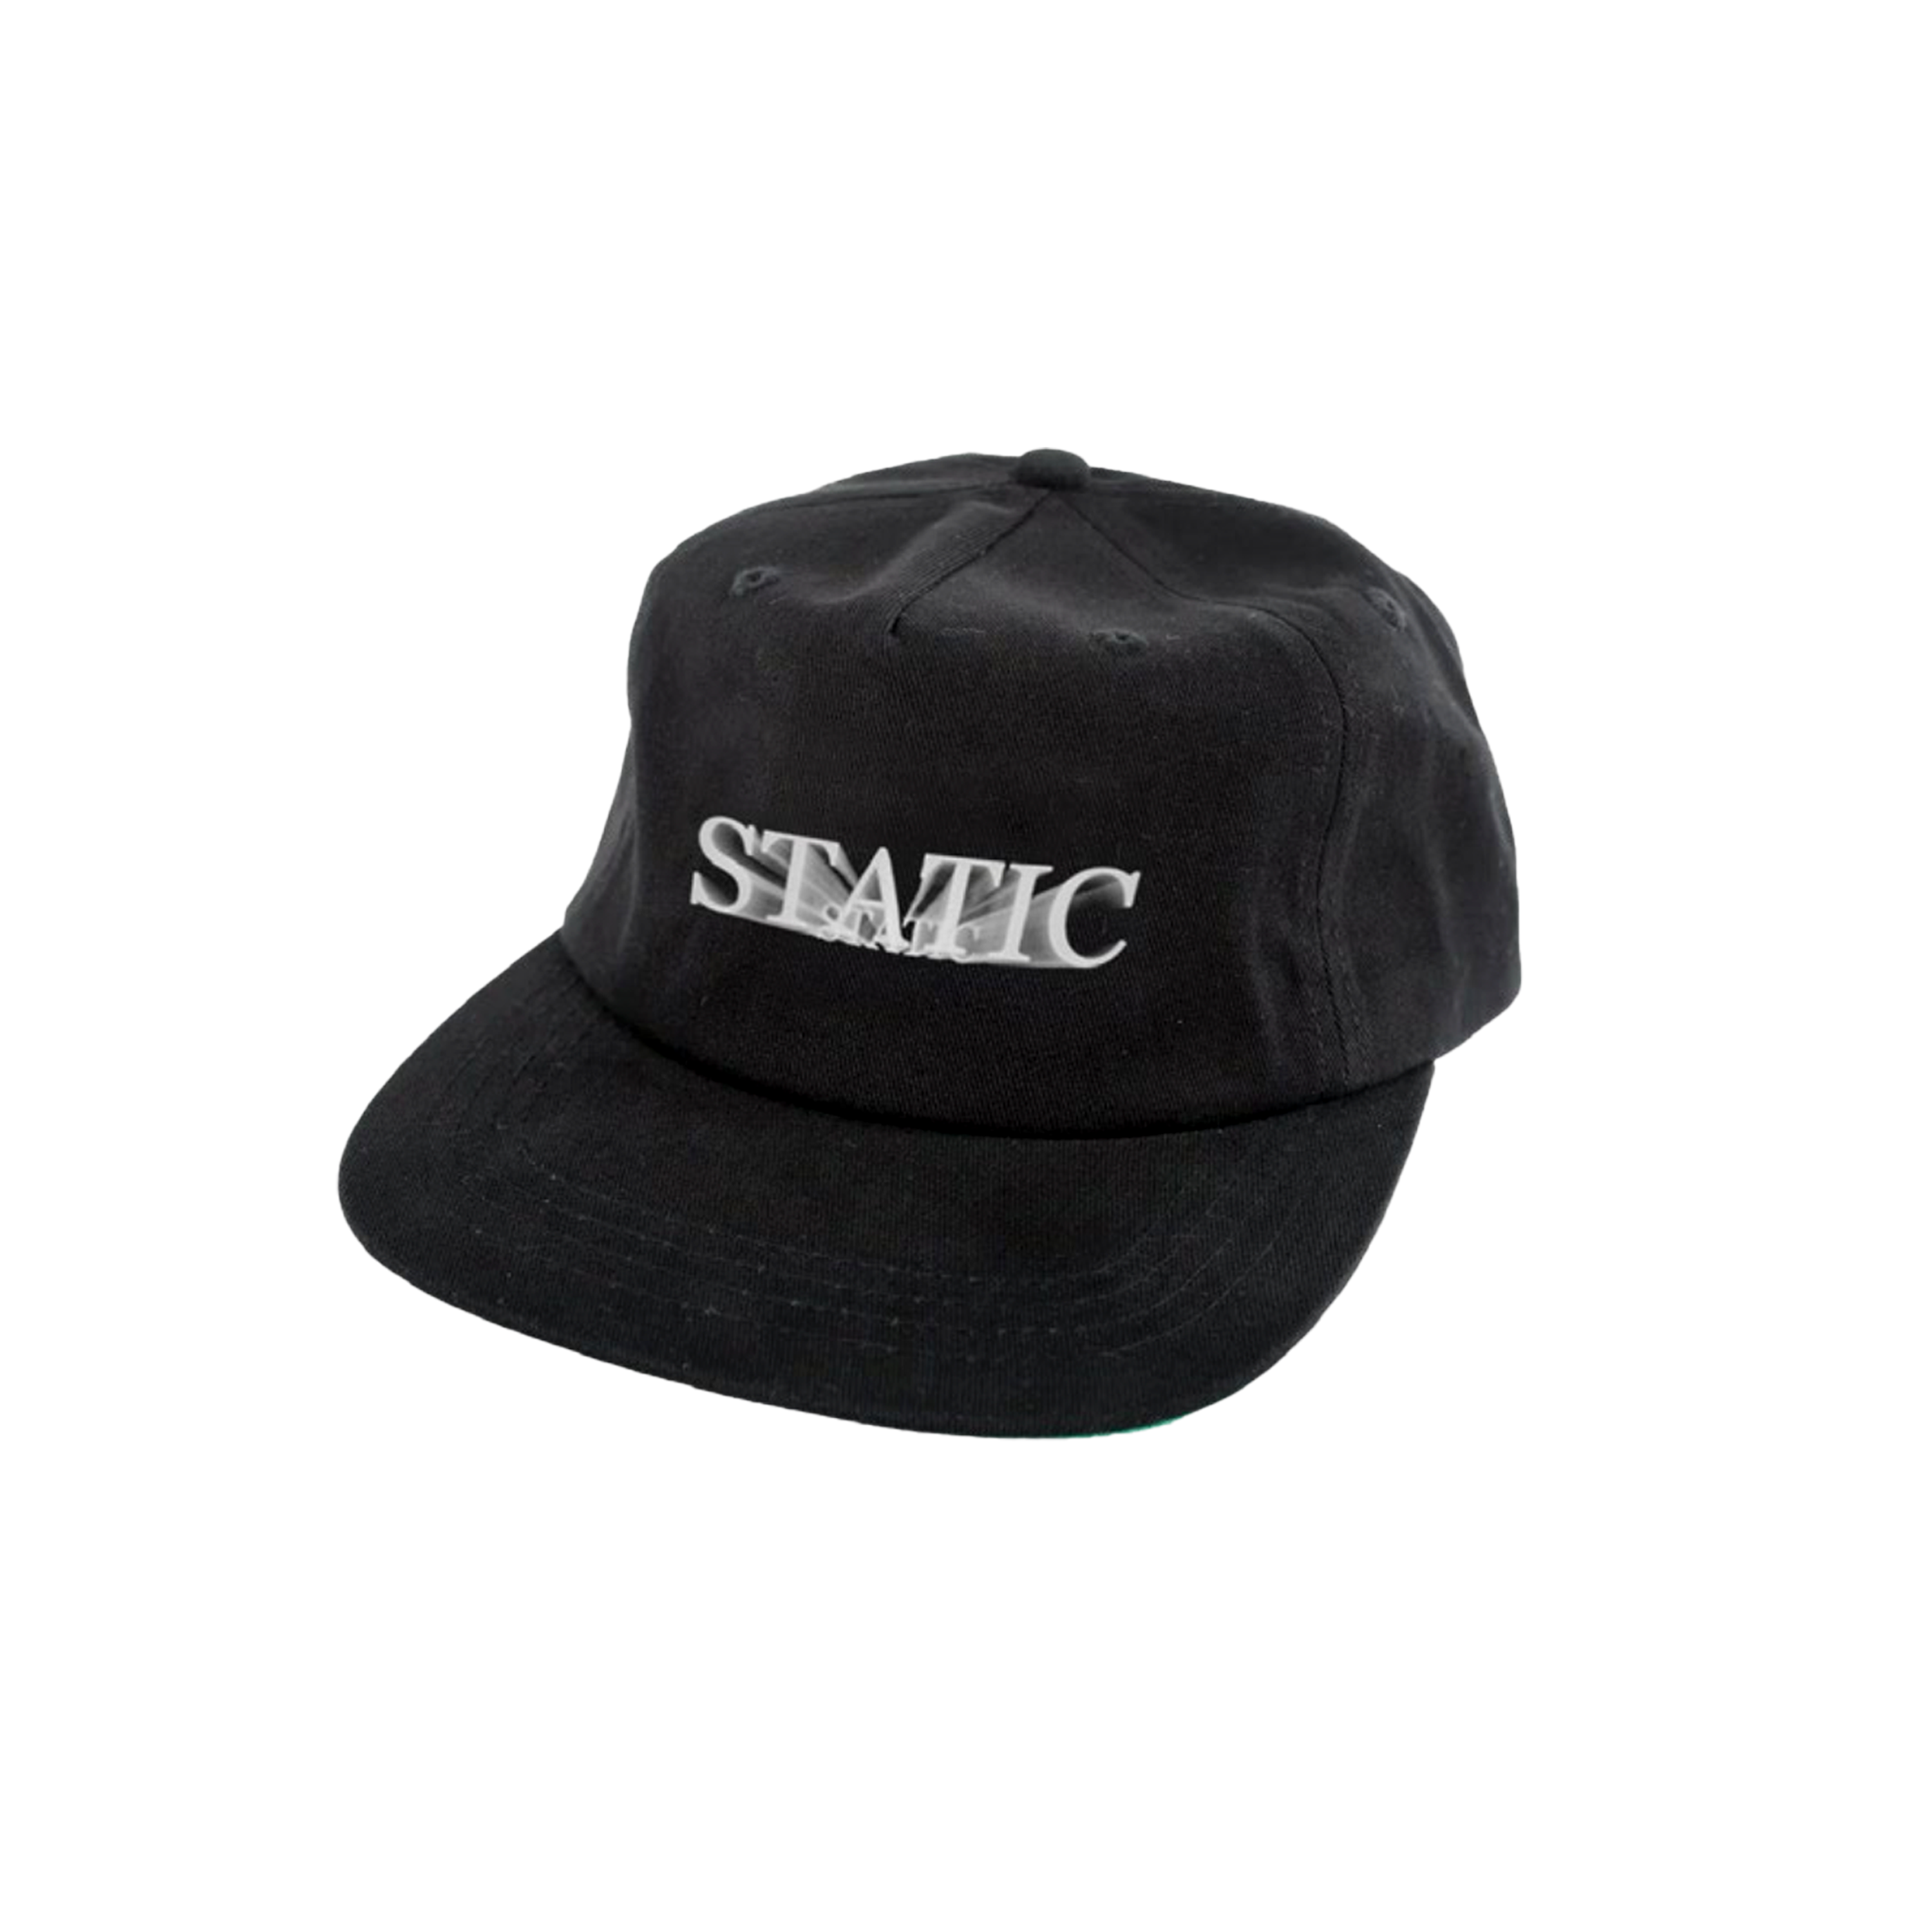 Static Spectacle Snapback Black